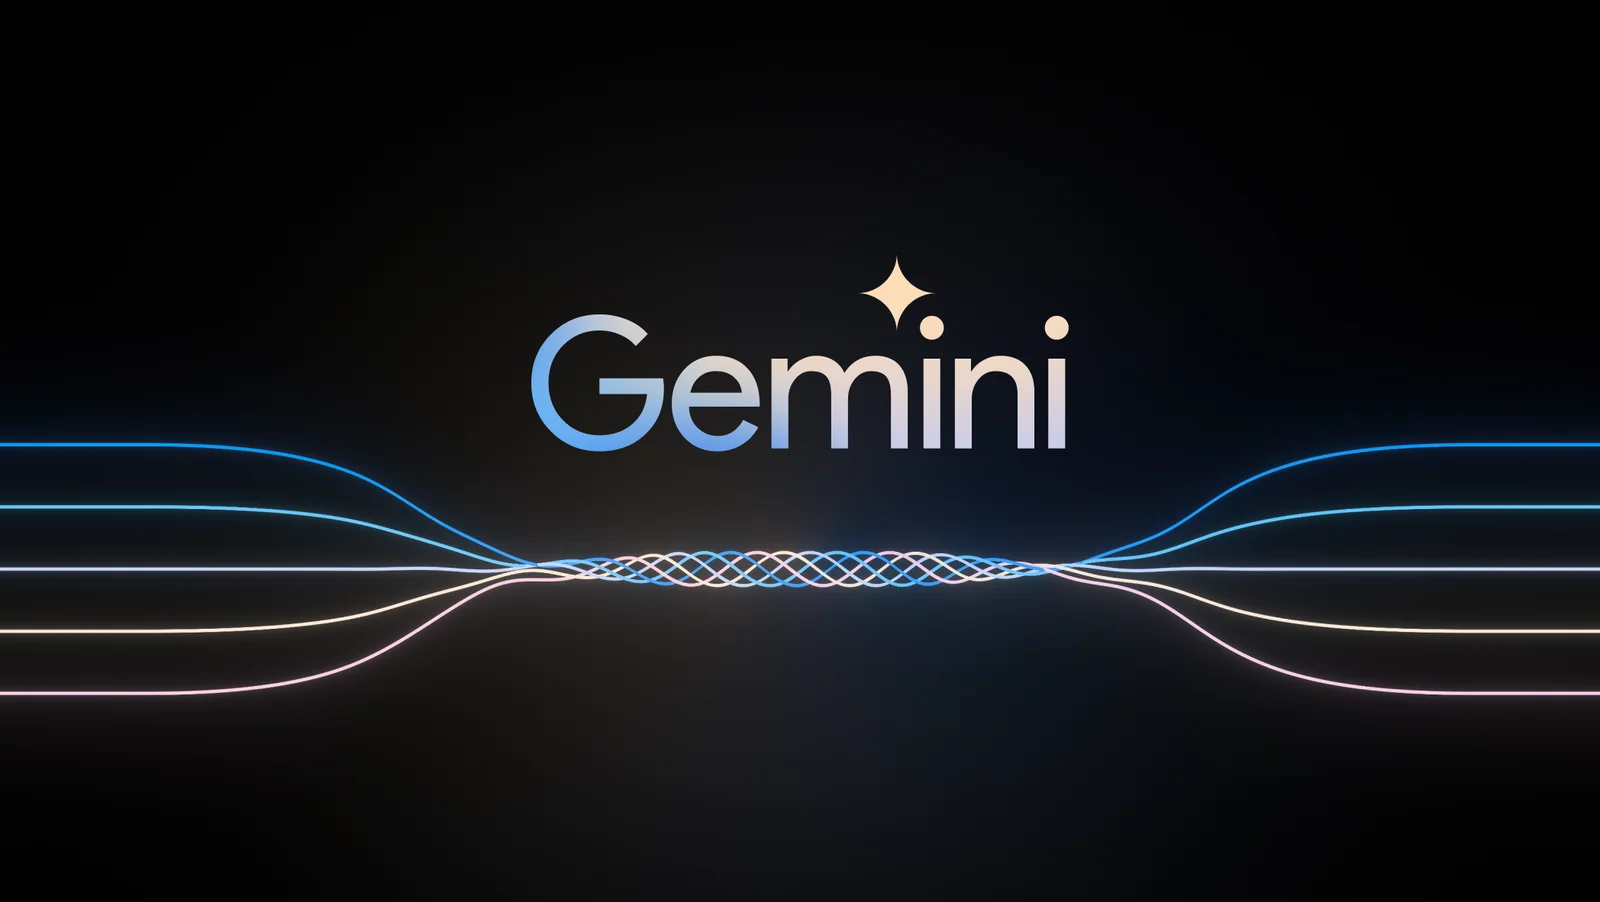 Google Addresses Issues Surrounding Gemini's Image-Generation Capabilities